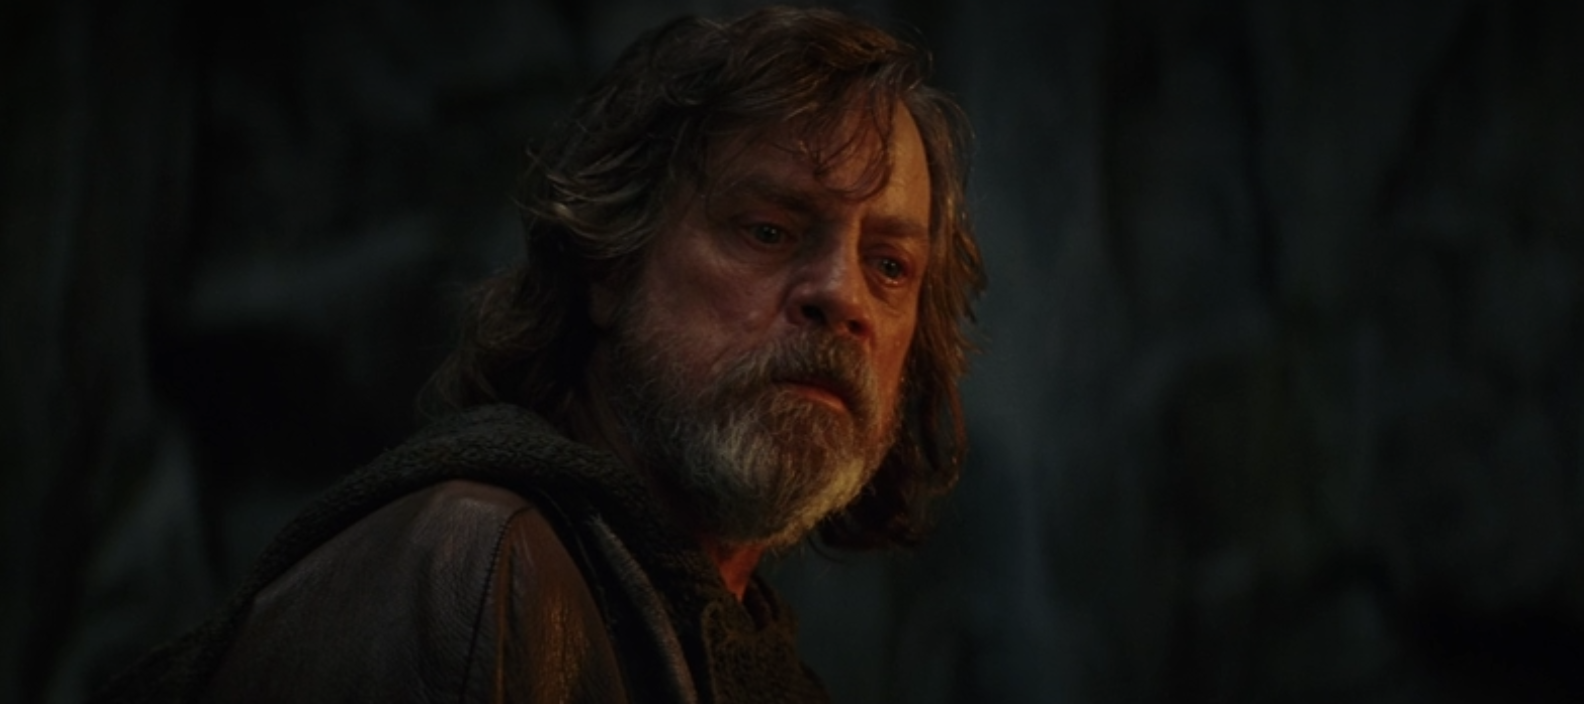 Star Wars: Rian Johnson trilogy CANCELLED? Last Jedi director